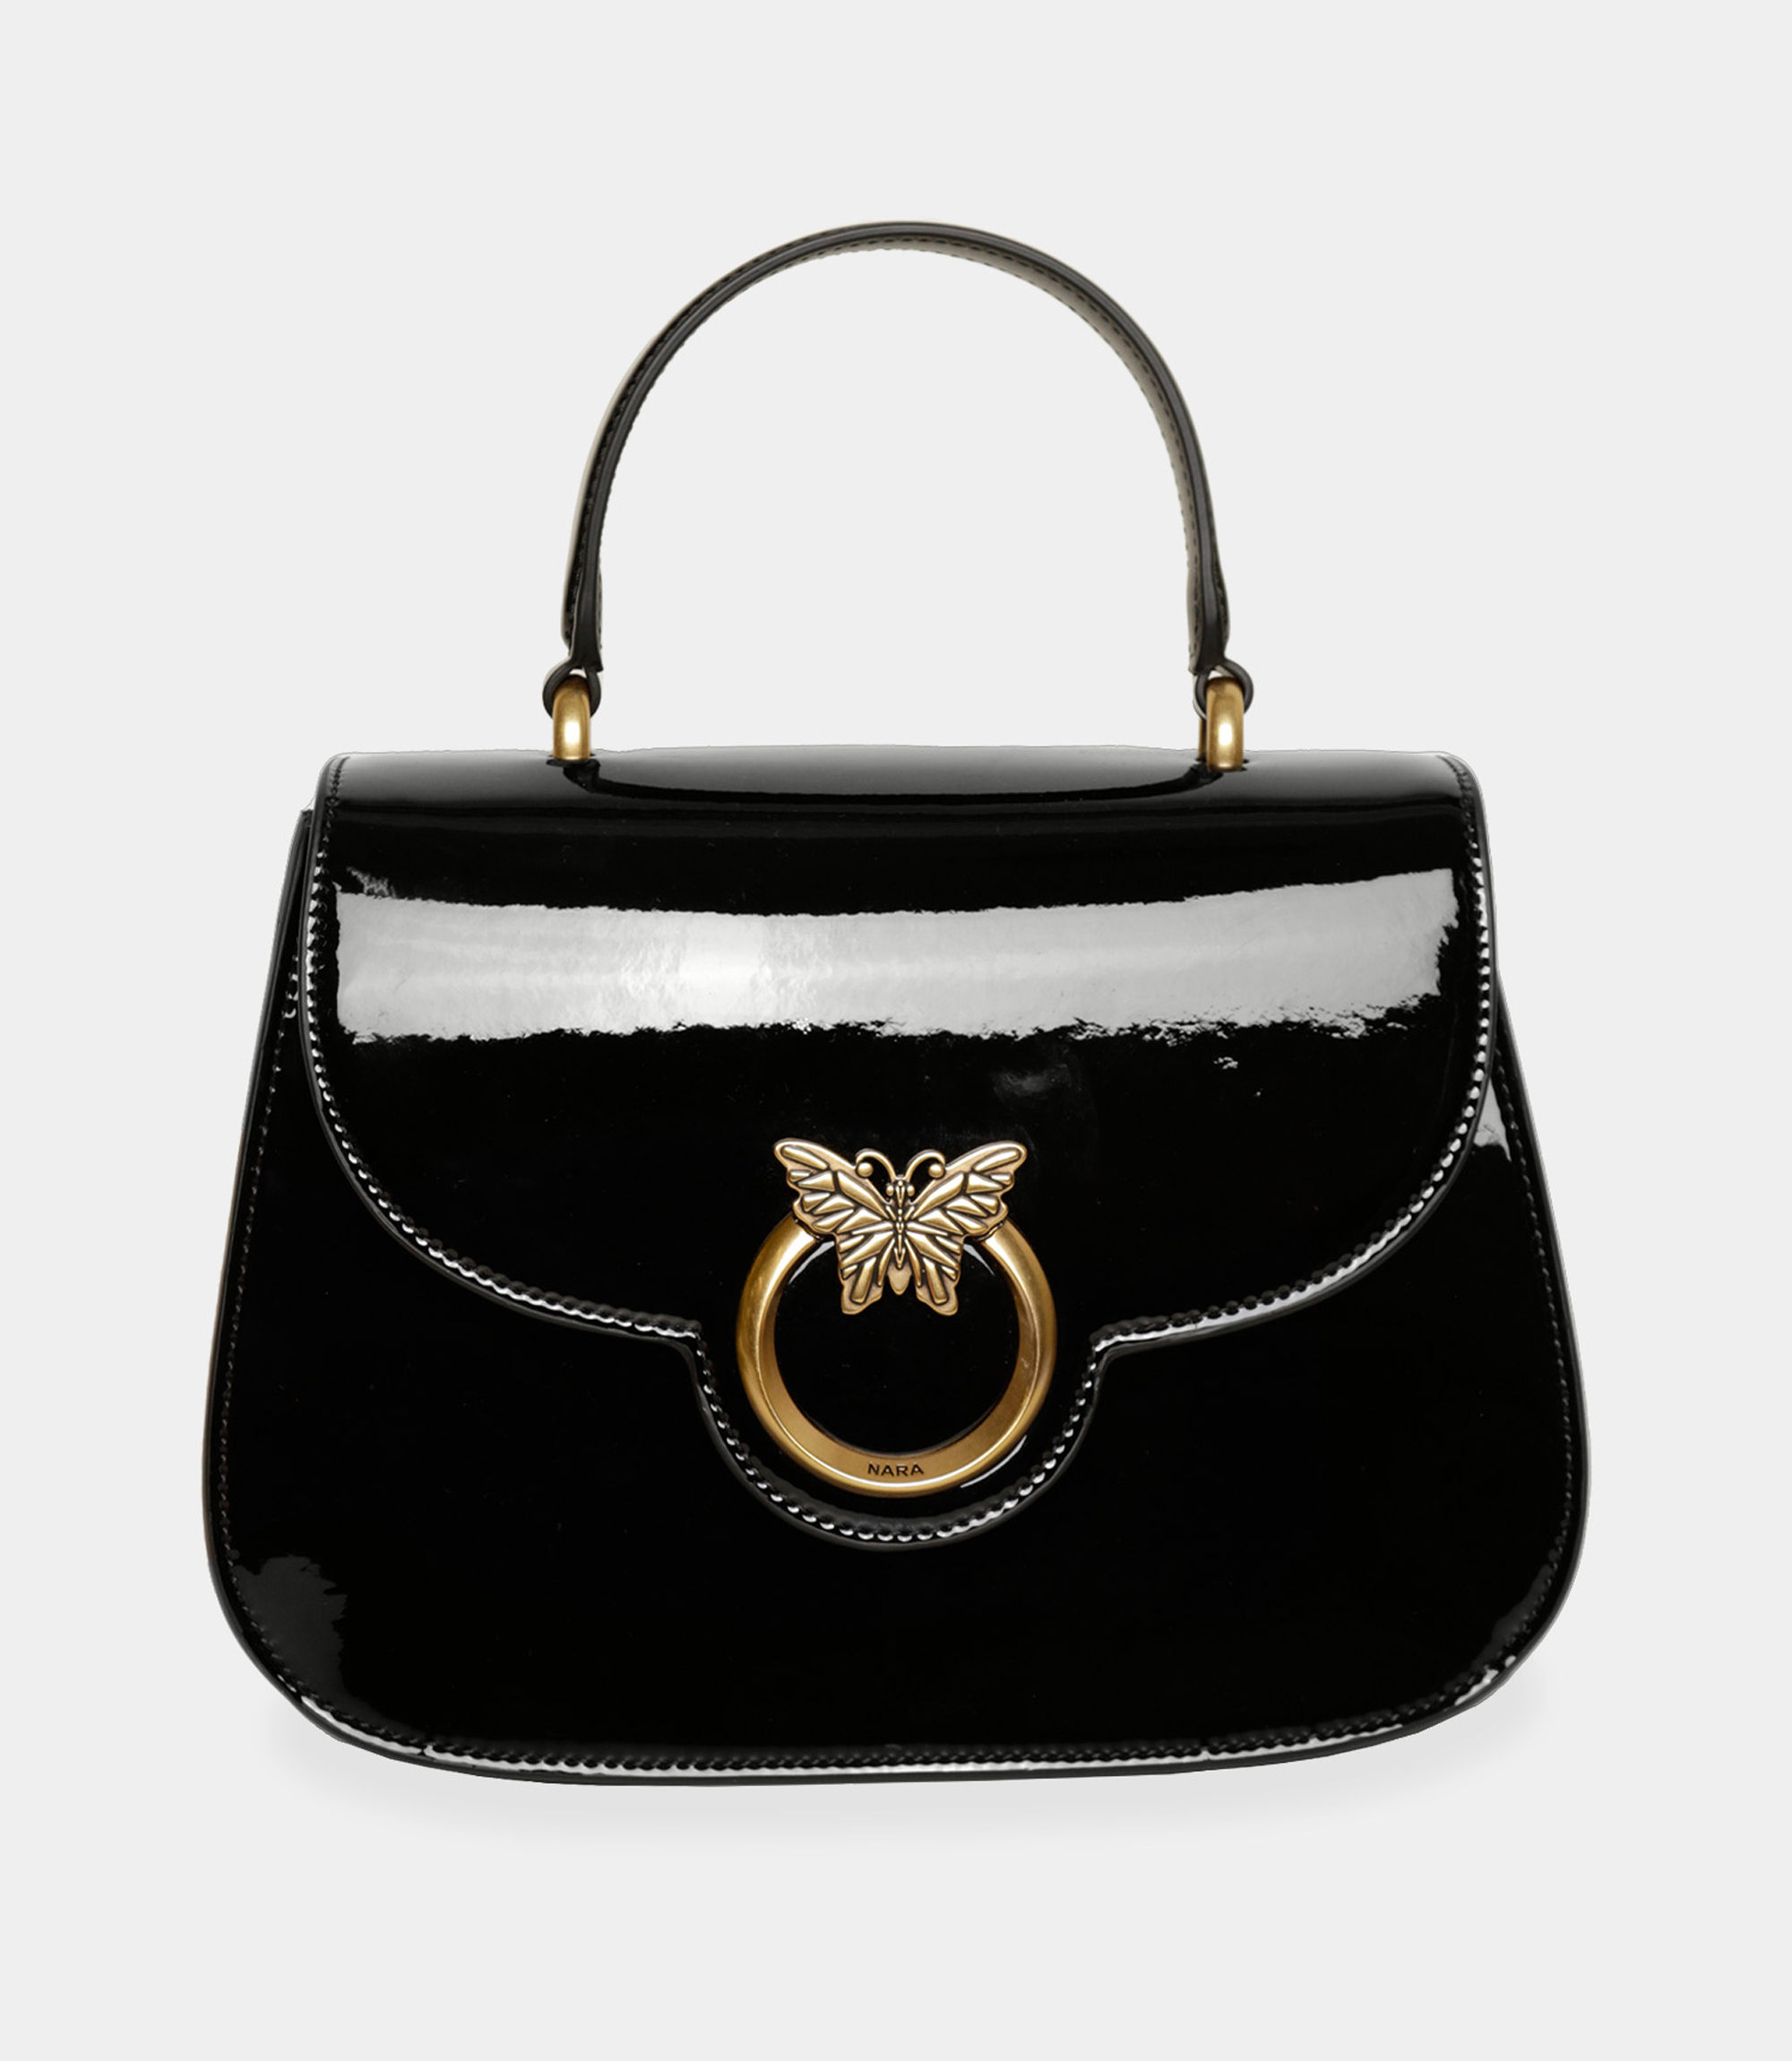 Black handbag made of patent leather - ACCESSORIES - NaraMilano